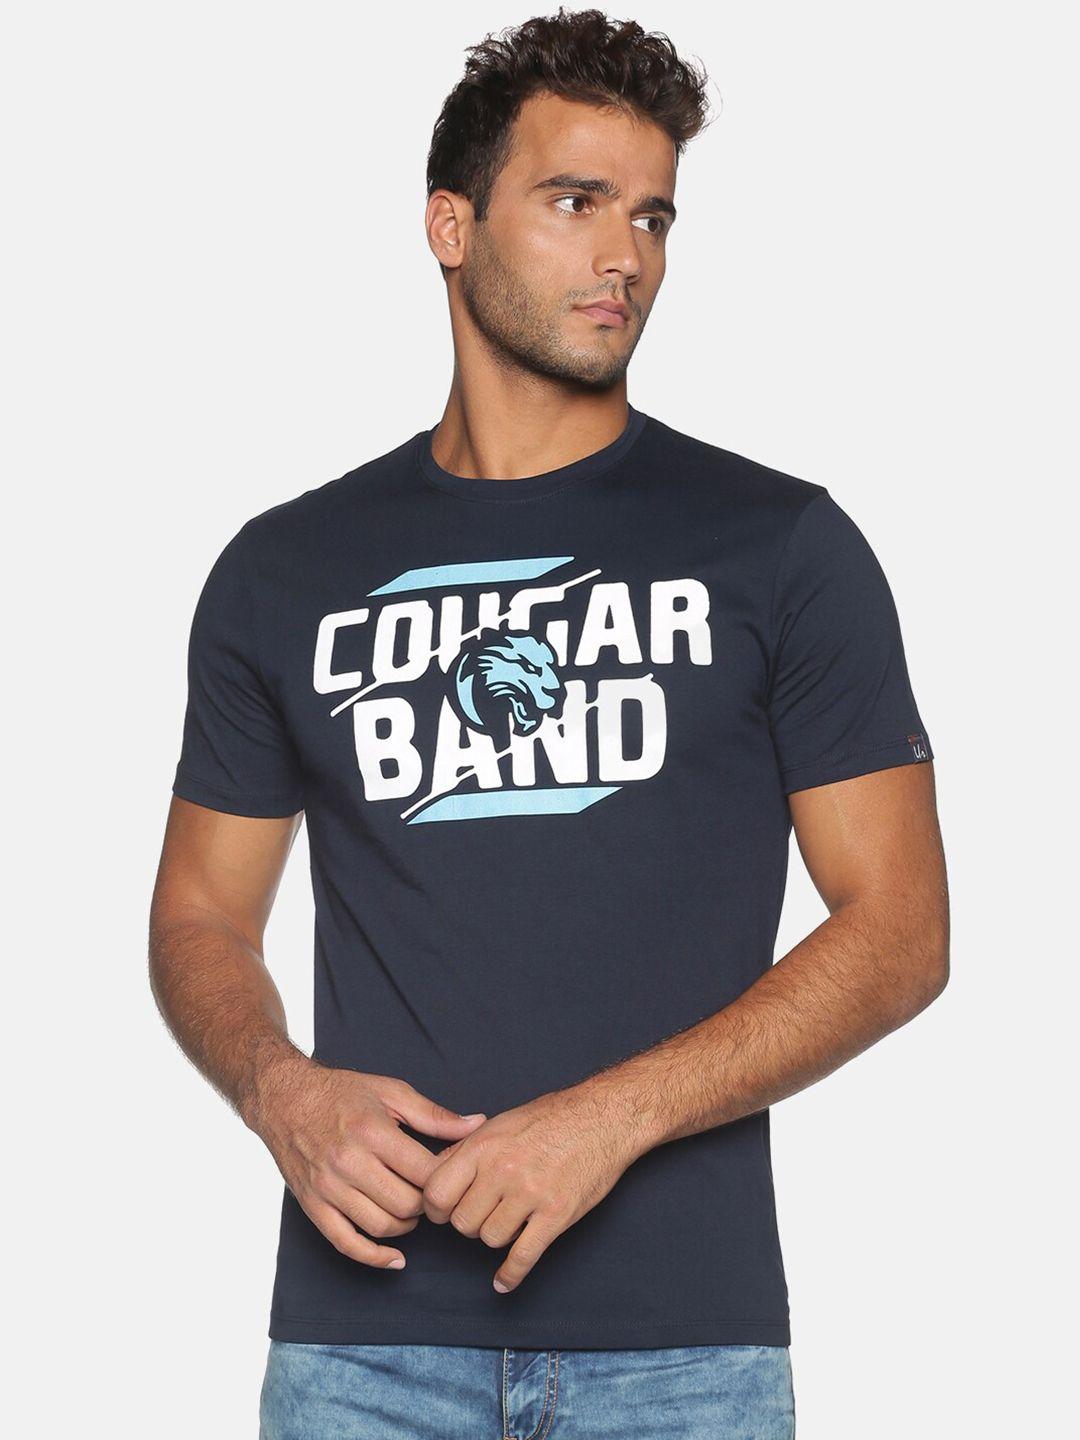 urgear-men-navy-blue-typography-printed-applique-t-shirt